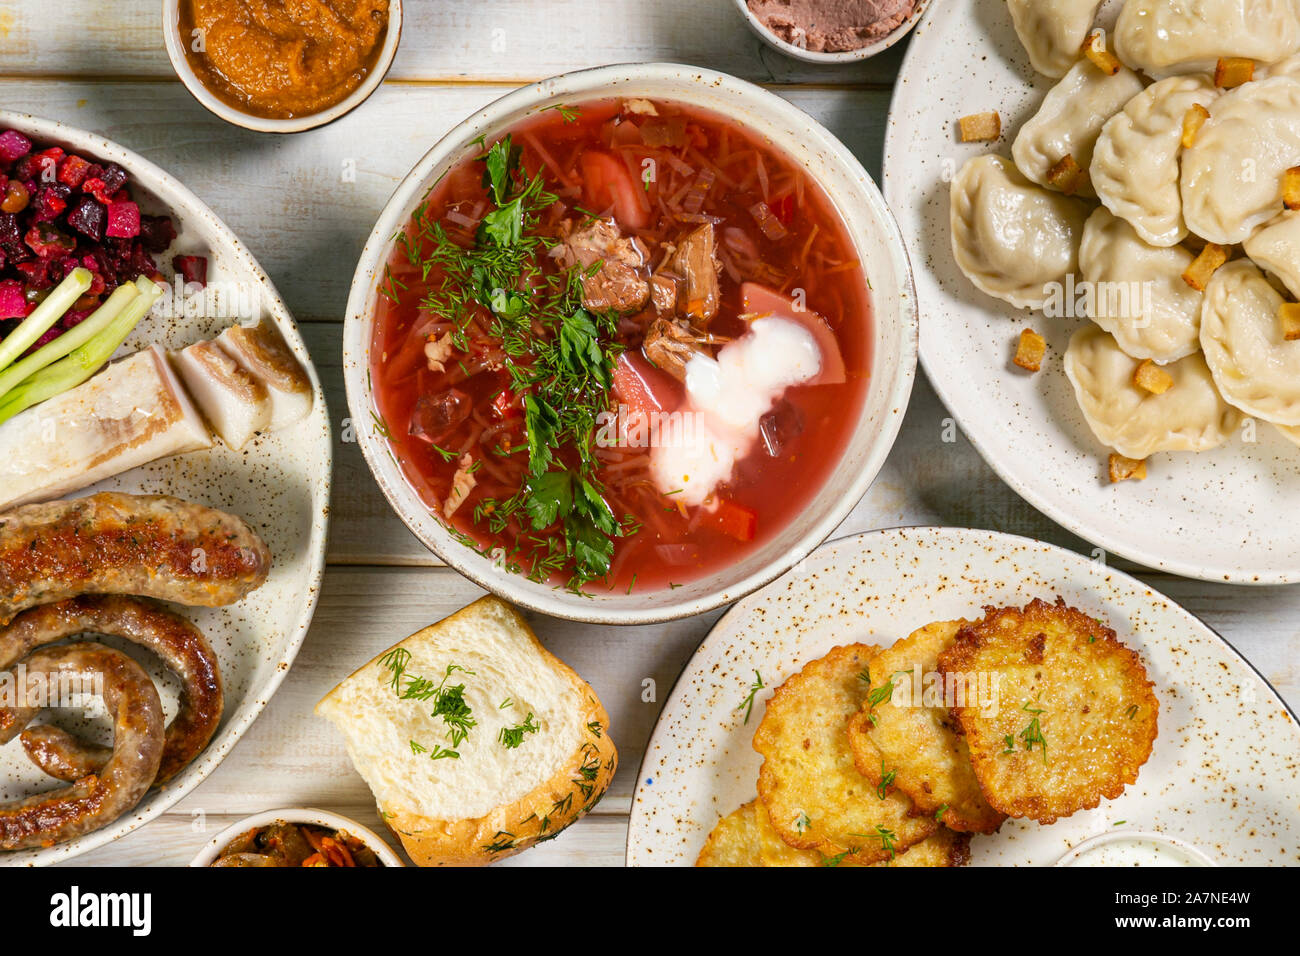 Selection of traditional ukrainian food - borsch, perogies, potato cakes, pickled vegetables Stock Photo